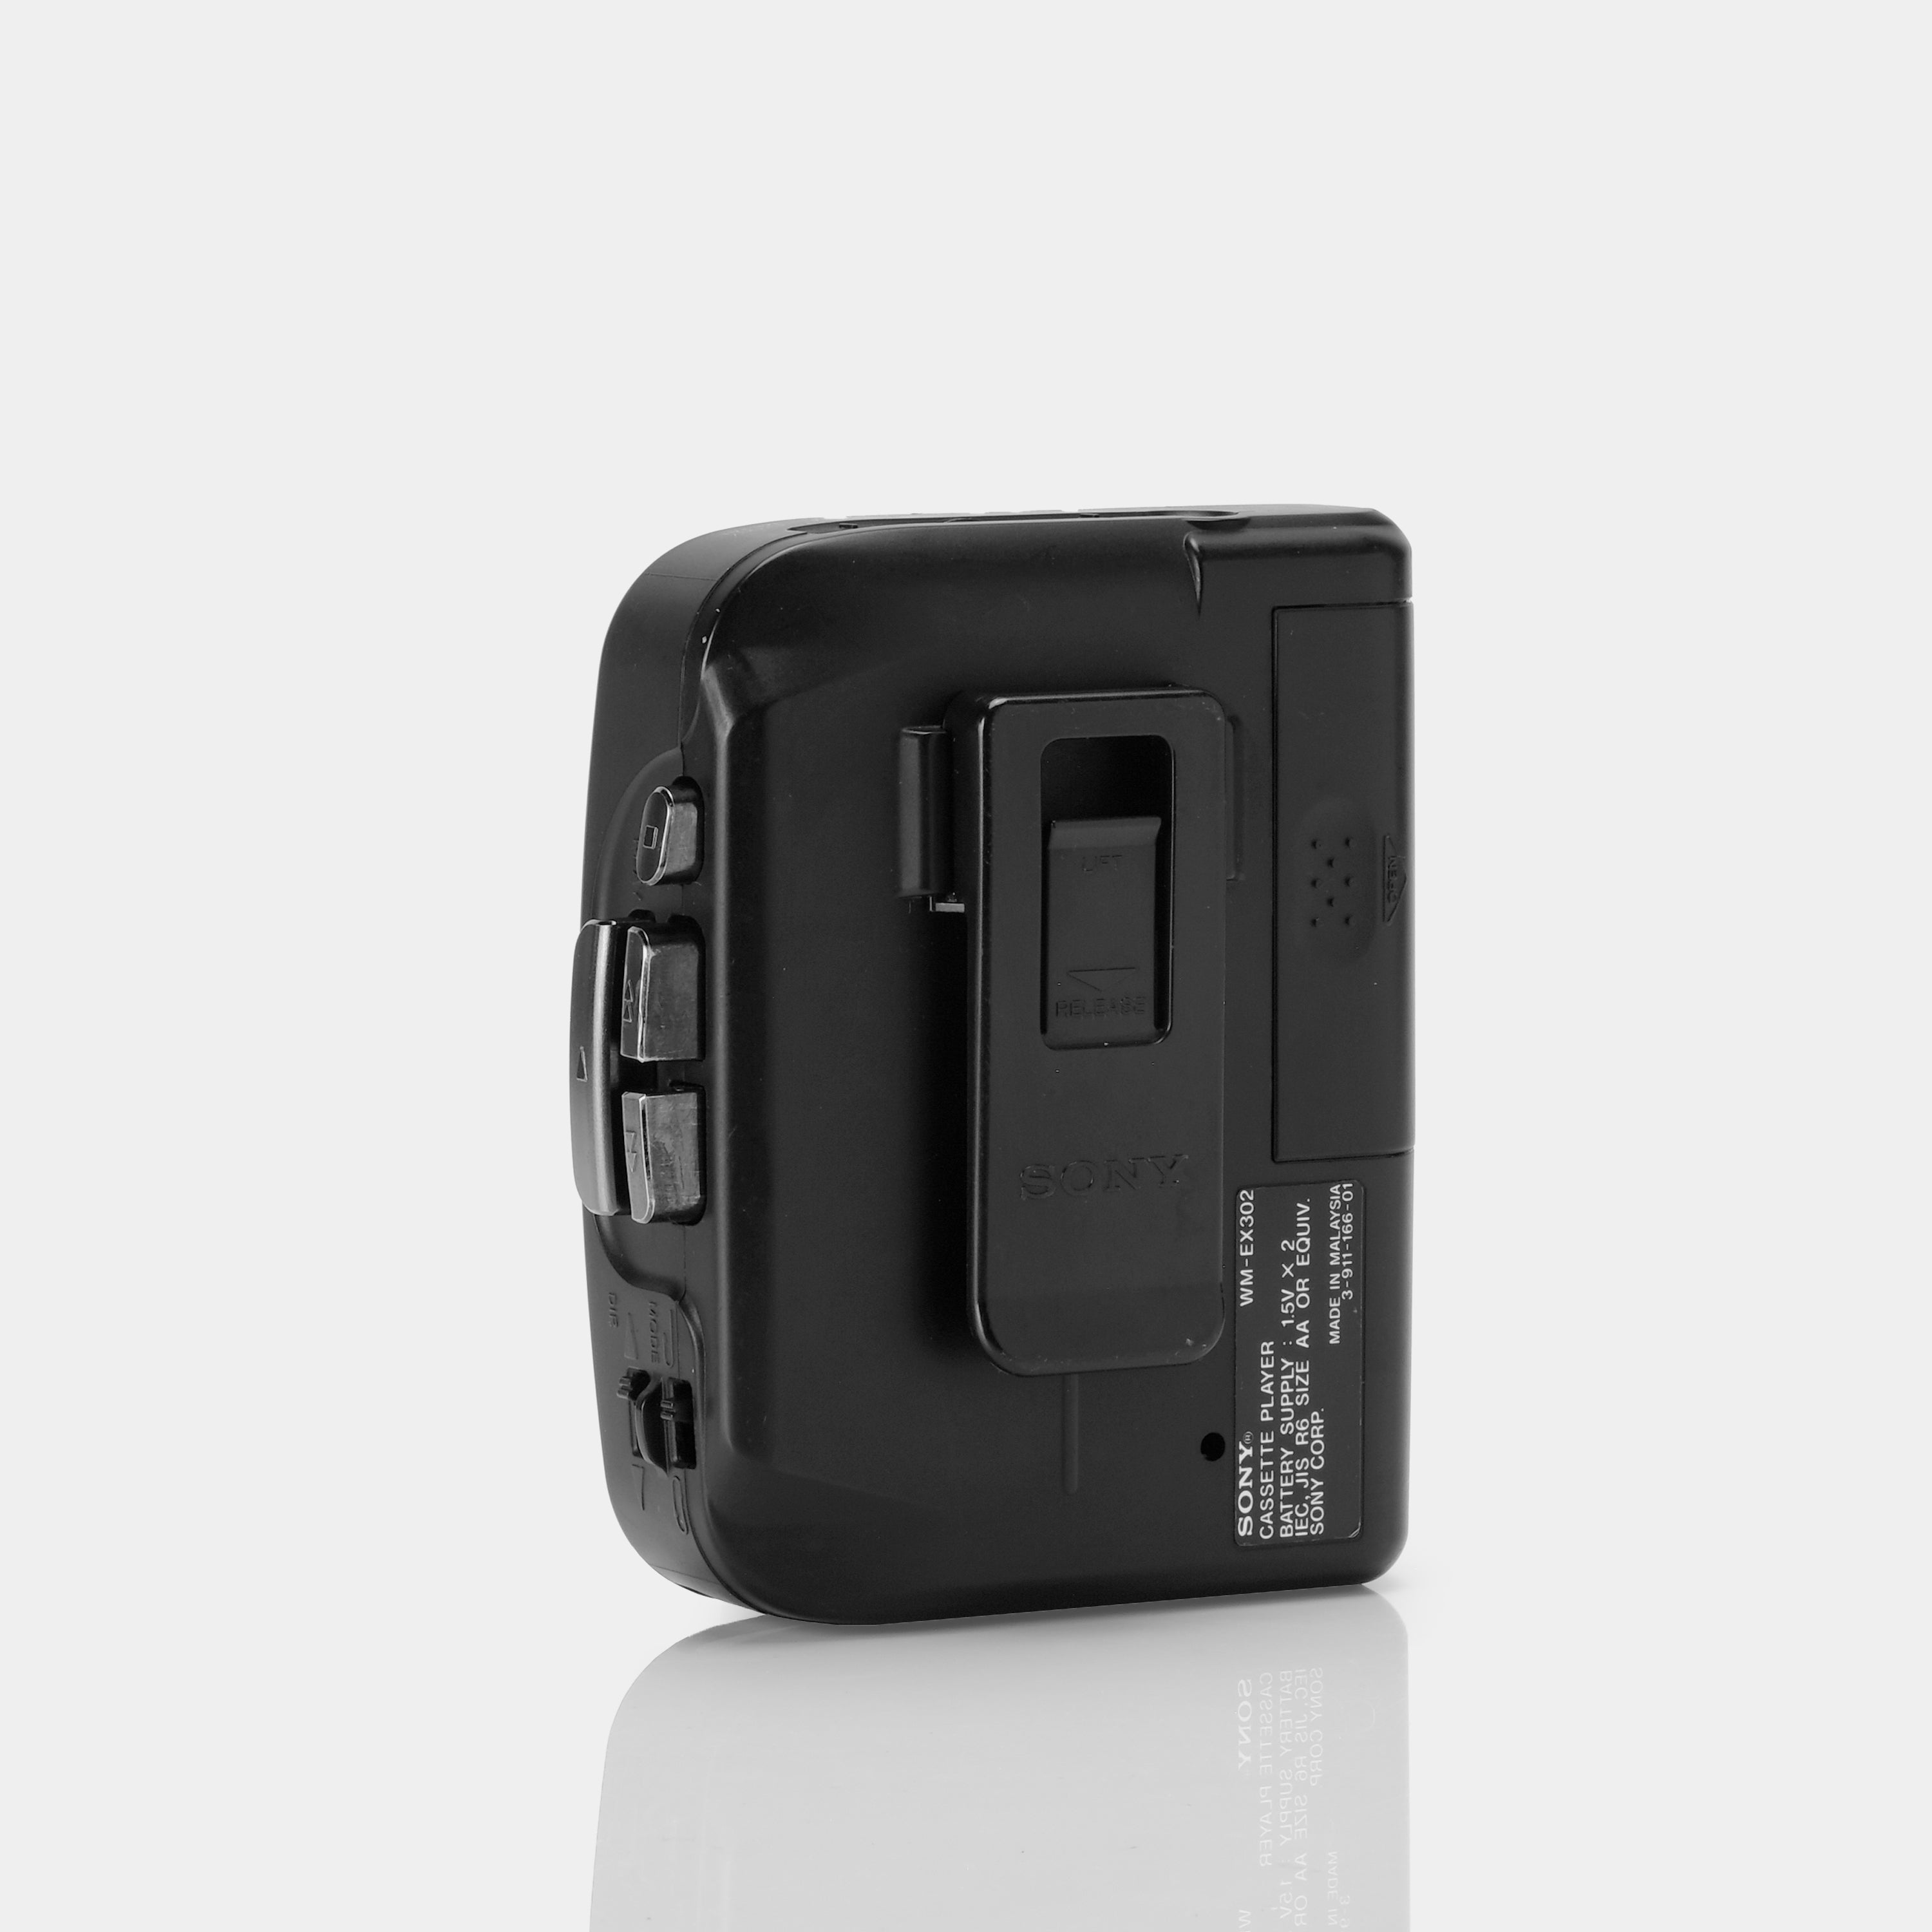 Sony Walkman WM-EX302 Auto Reverse AM/FM Portable Cassette Player